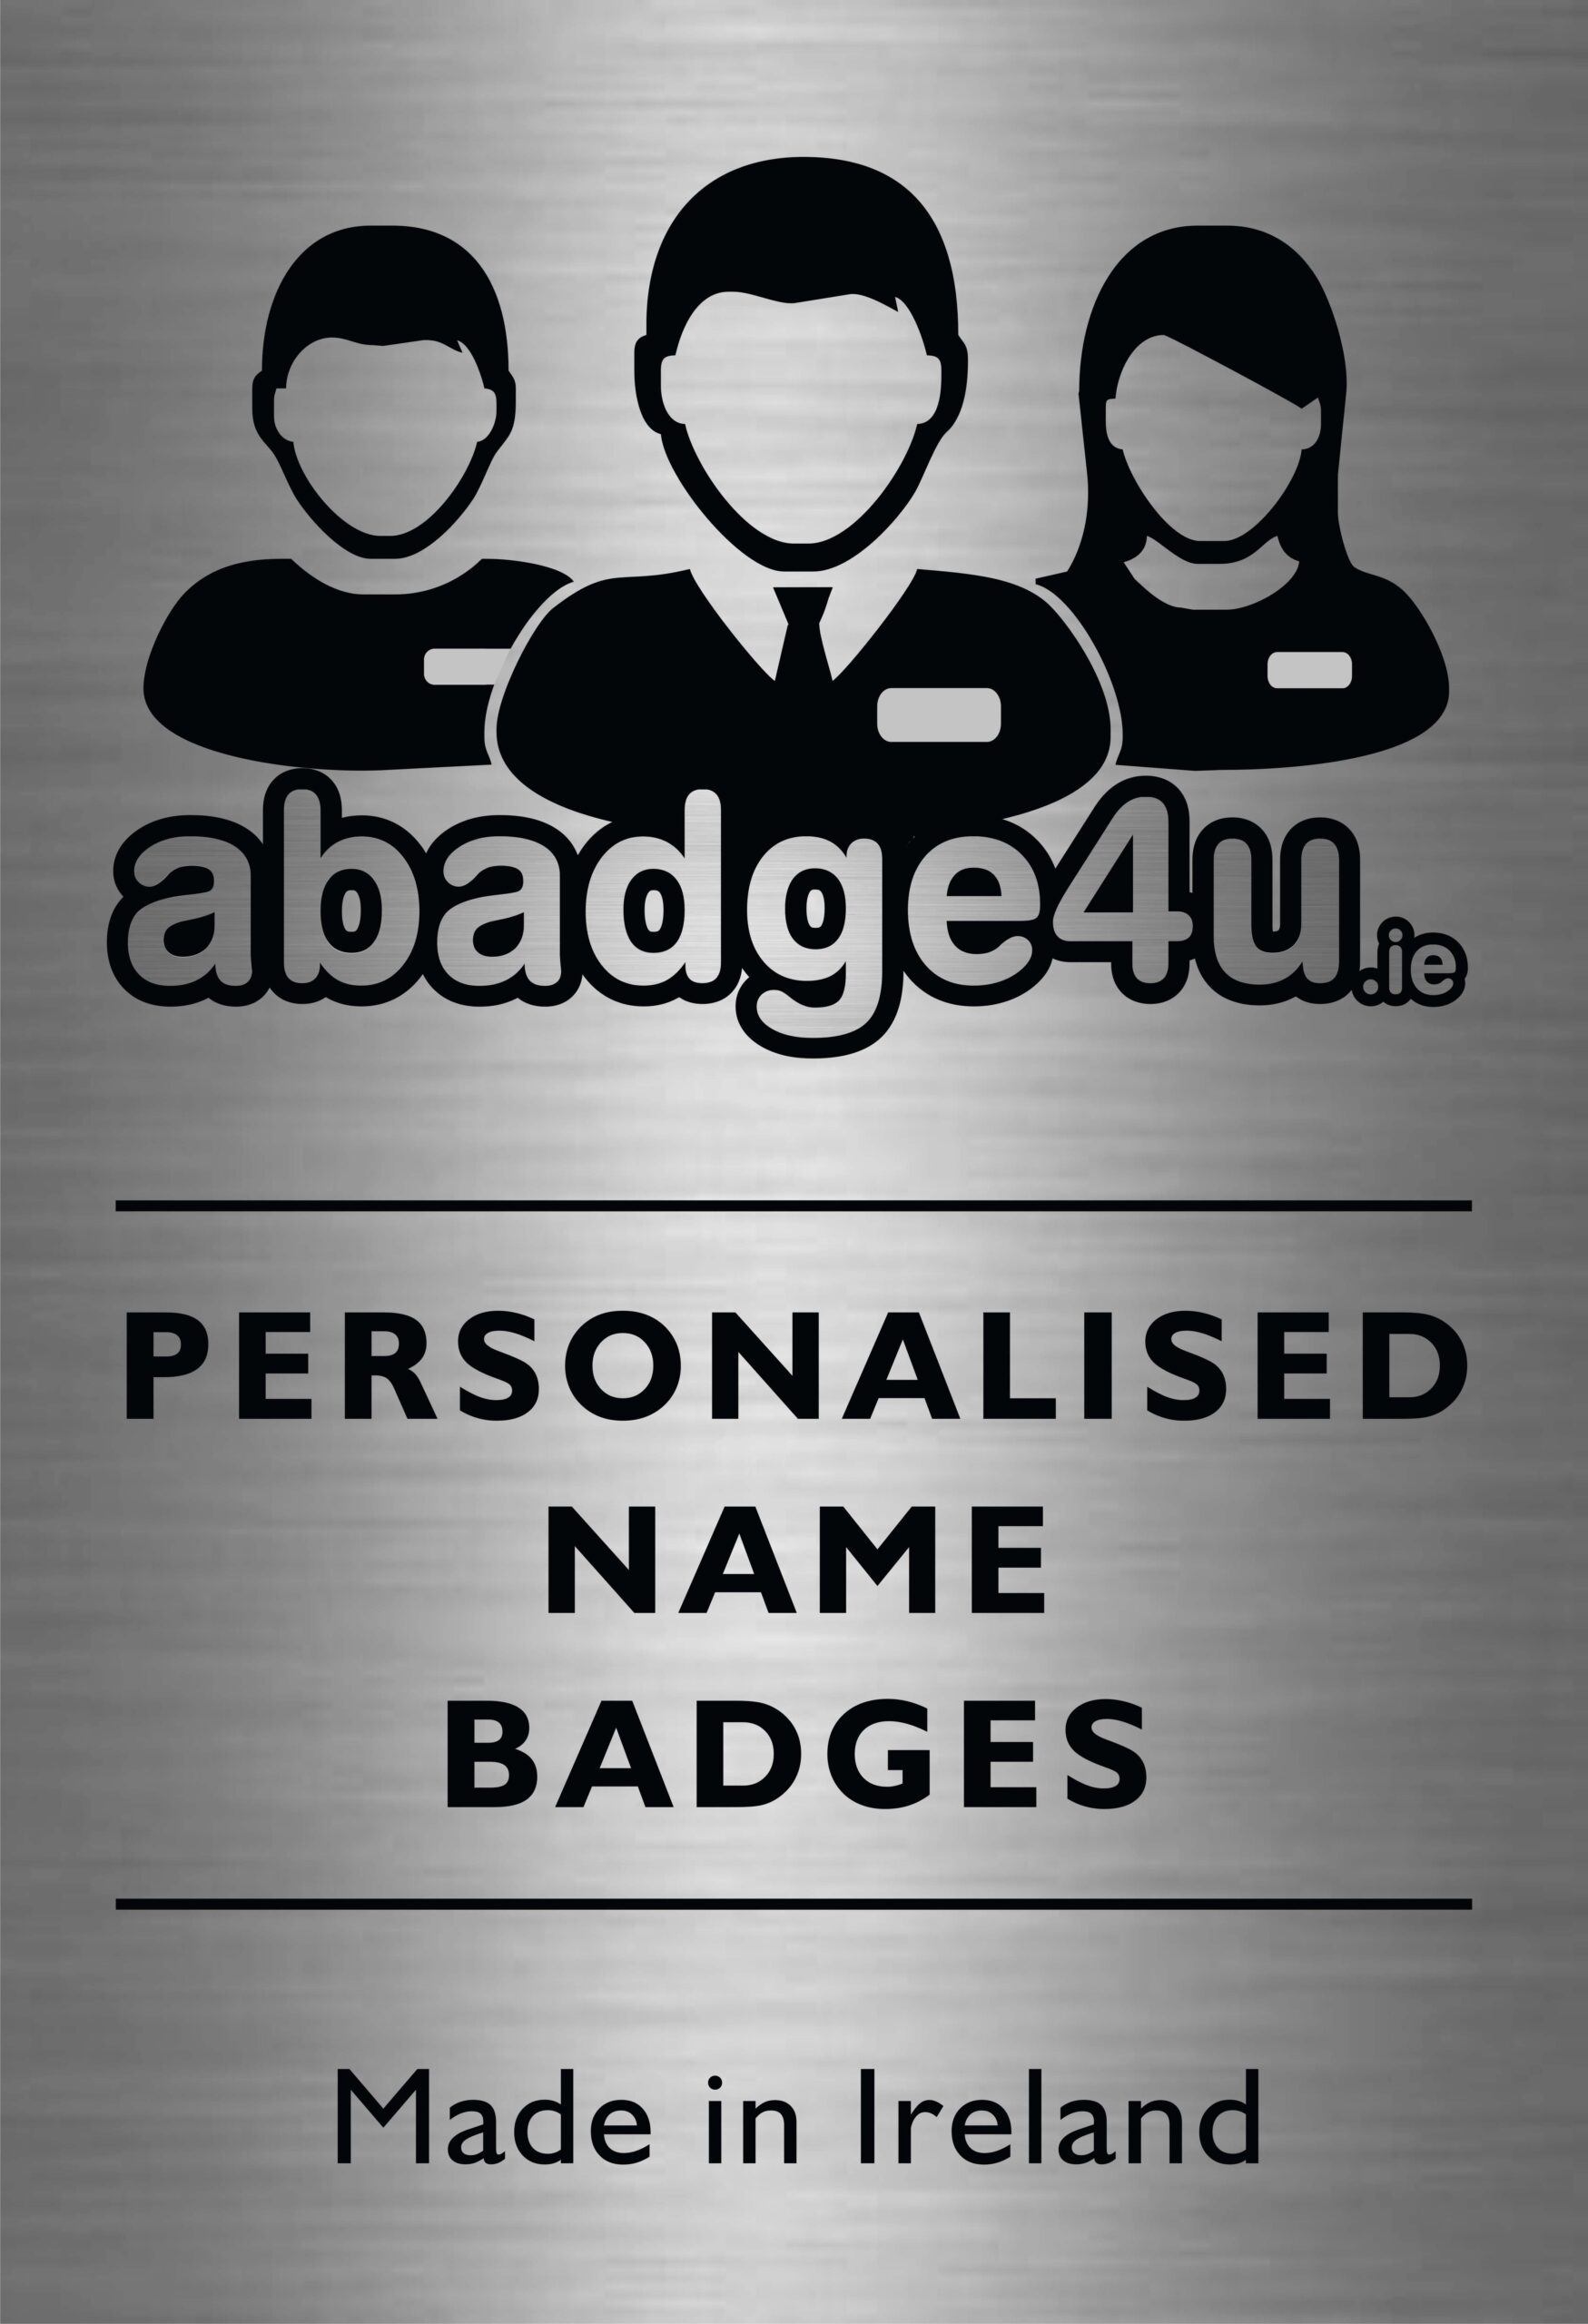 Staff Name Badges